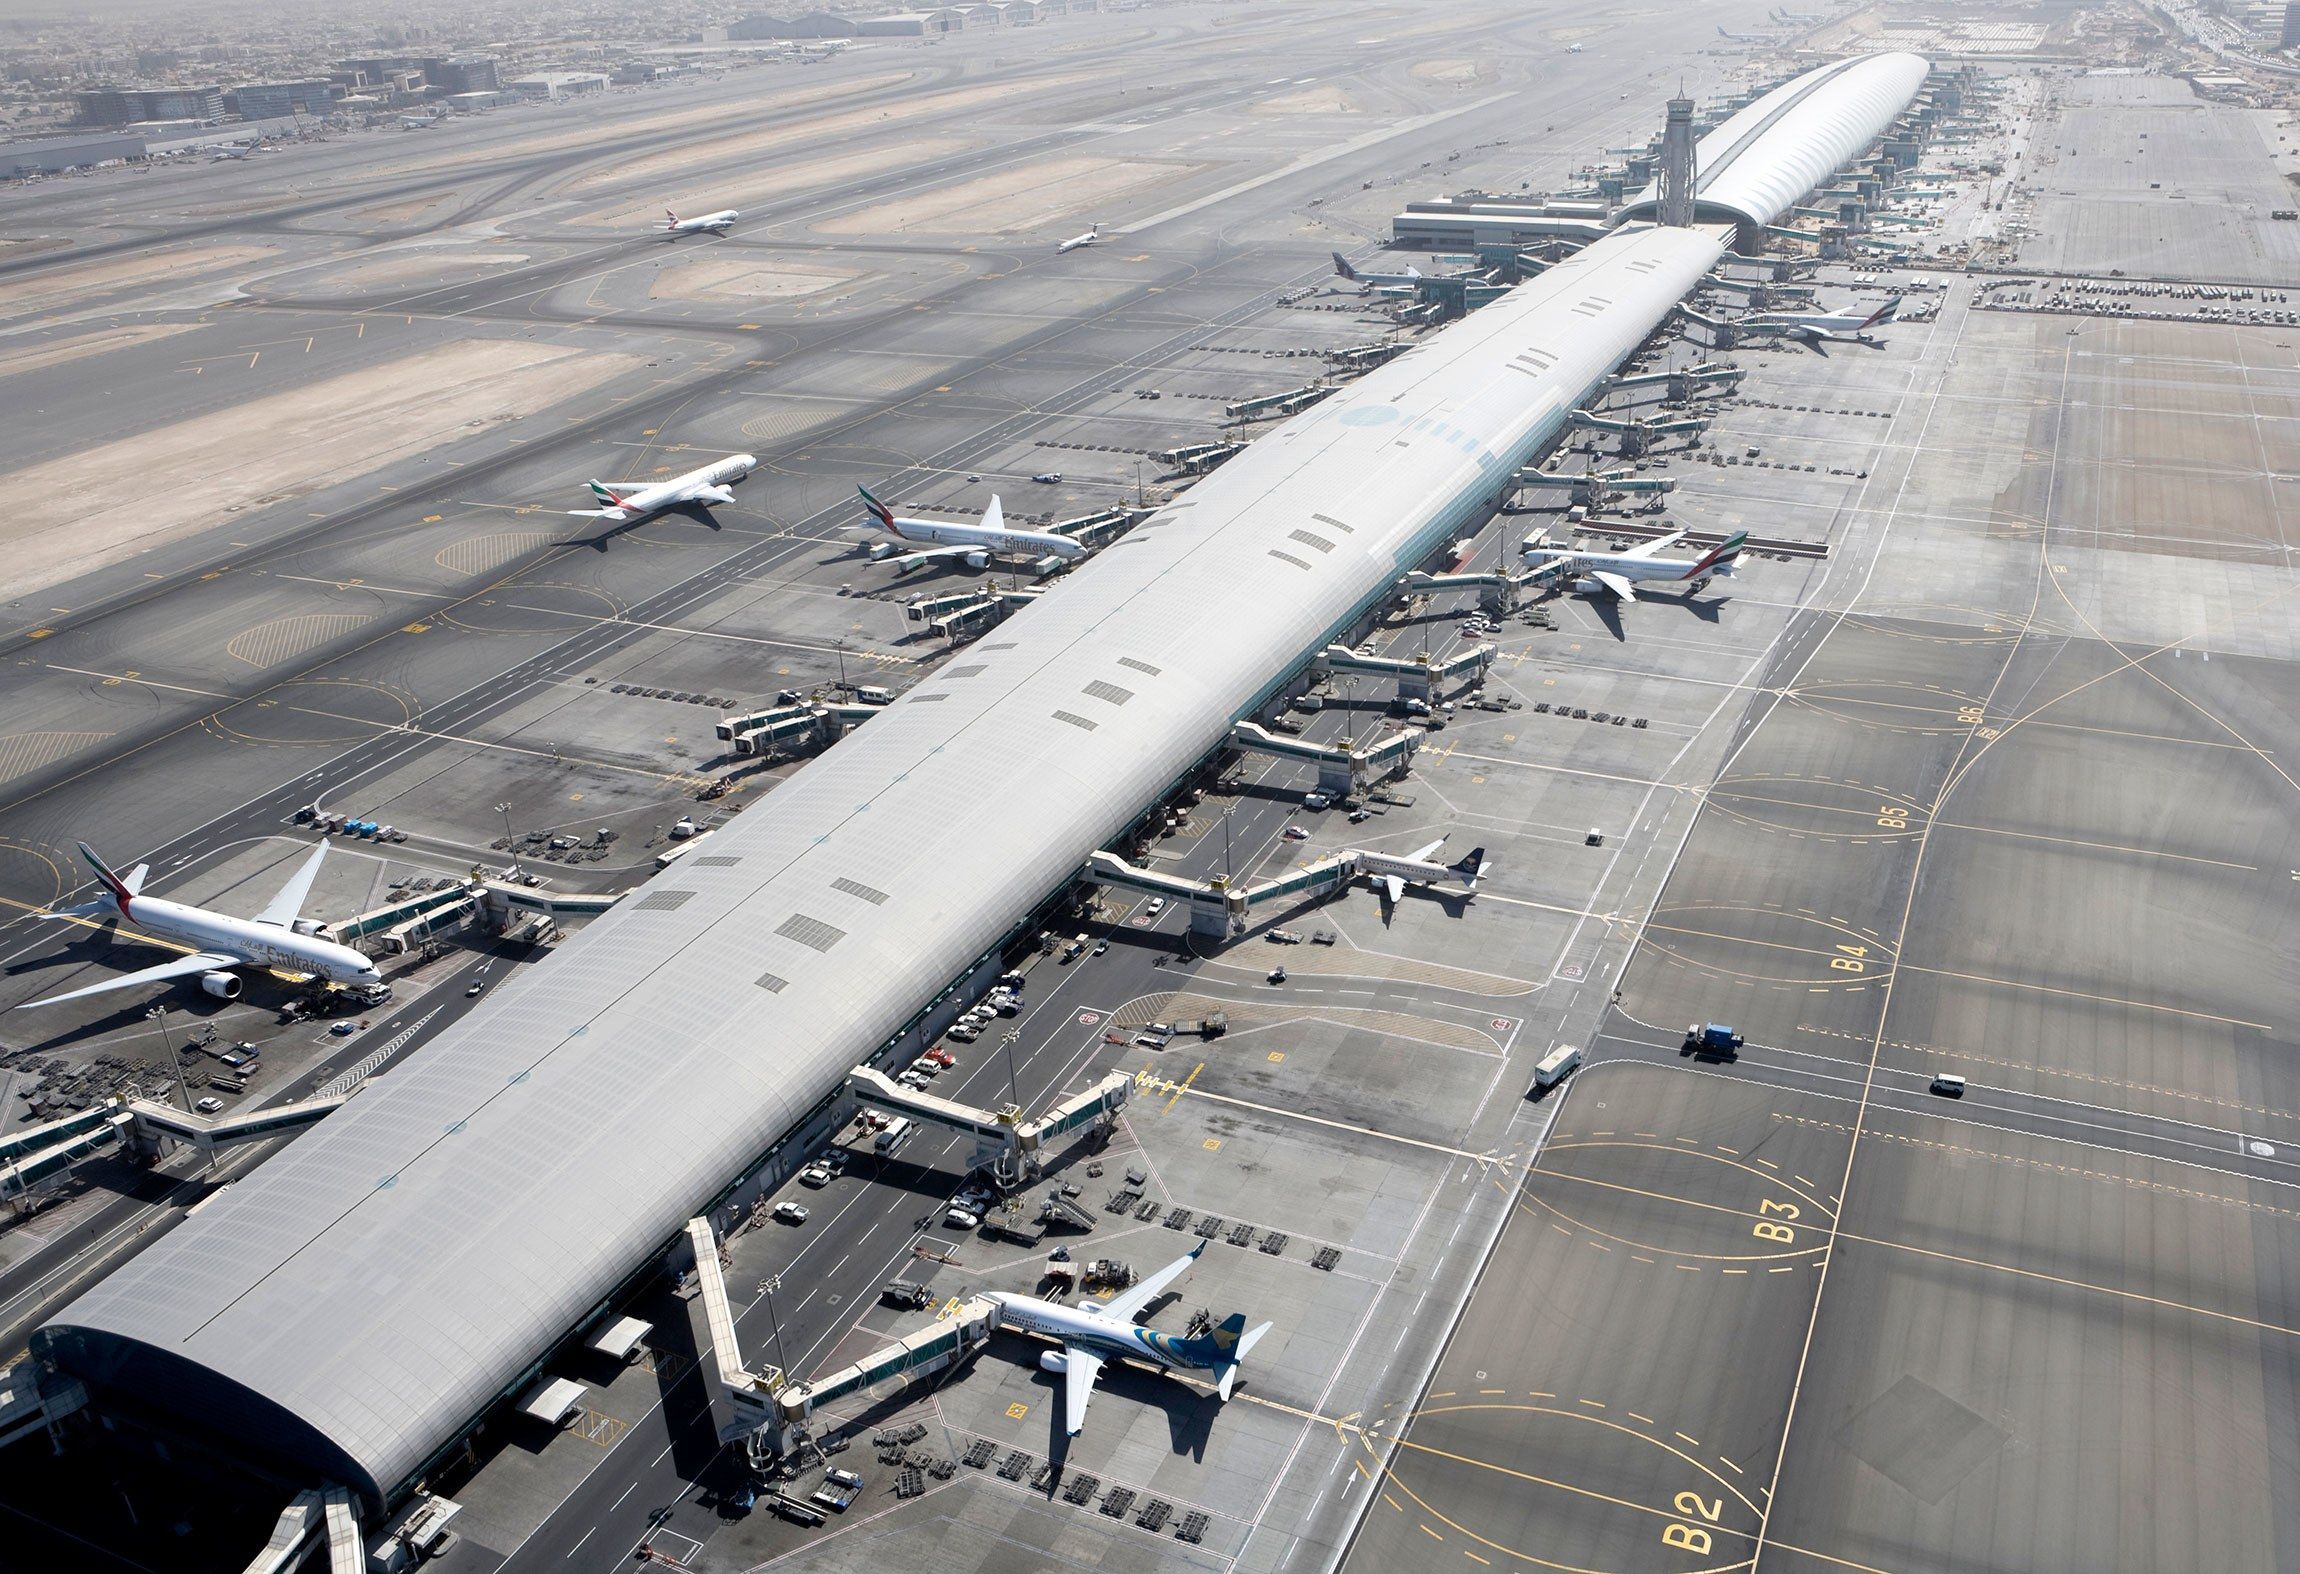 Amazing Aerial Views of Airports. Dubai international airport, Aerial view, Dubai airport